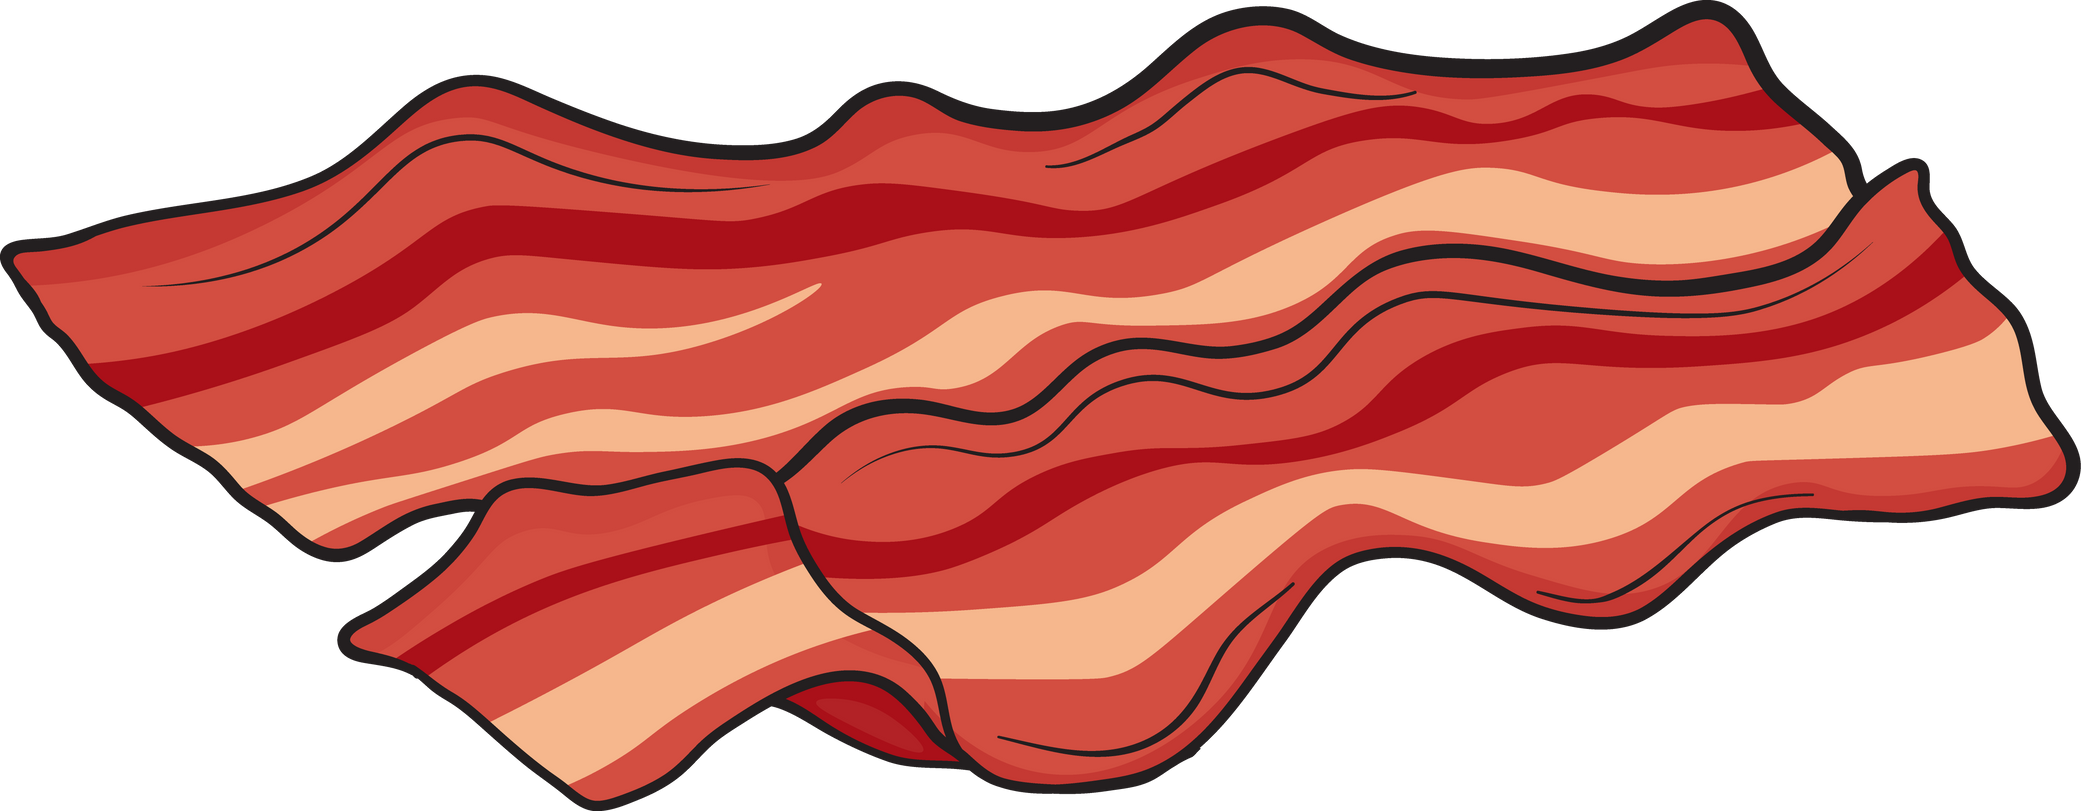 Fried Bacon Strips